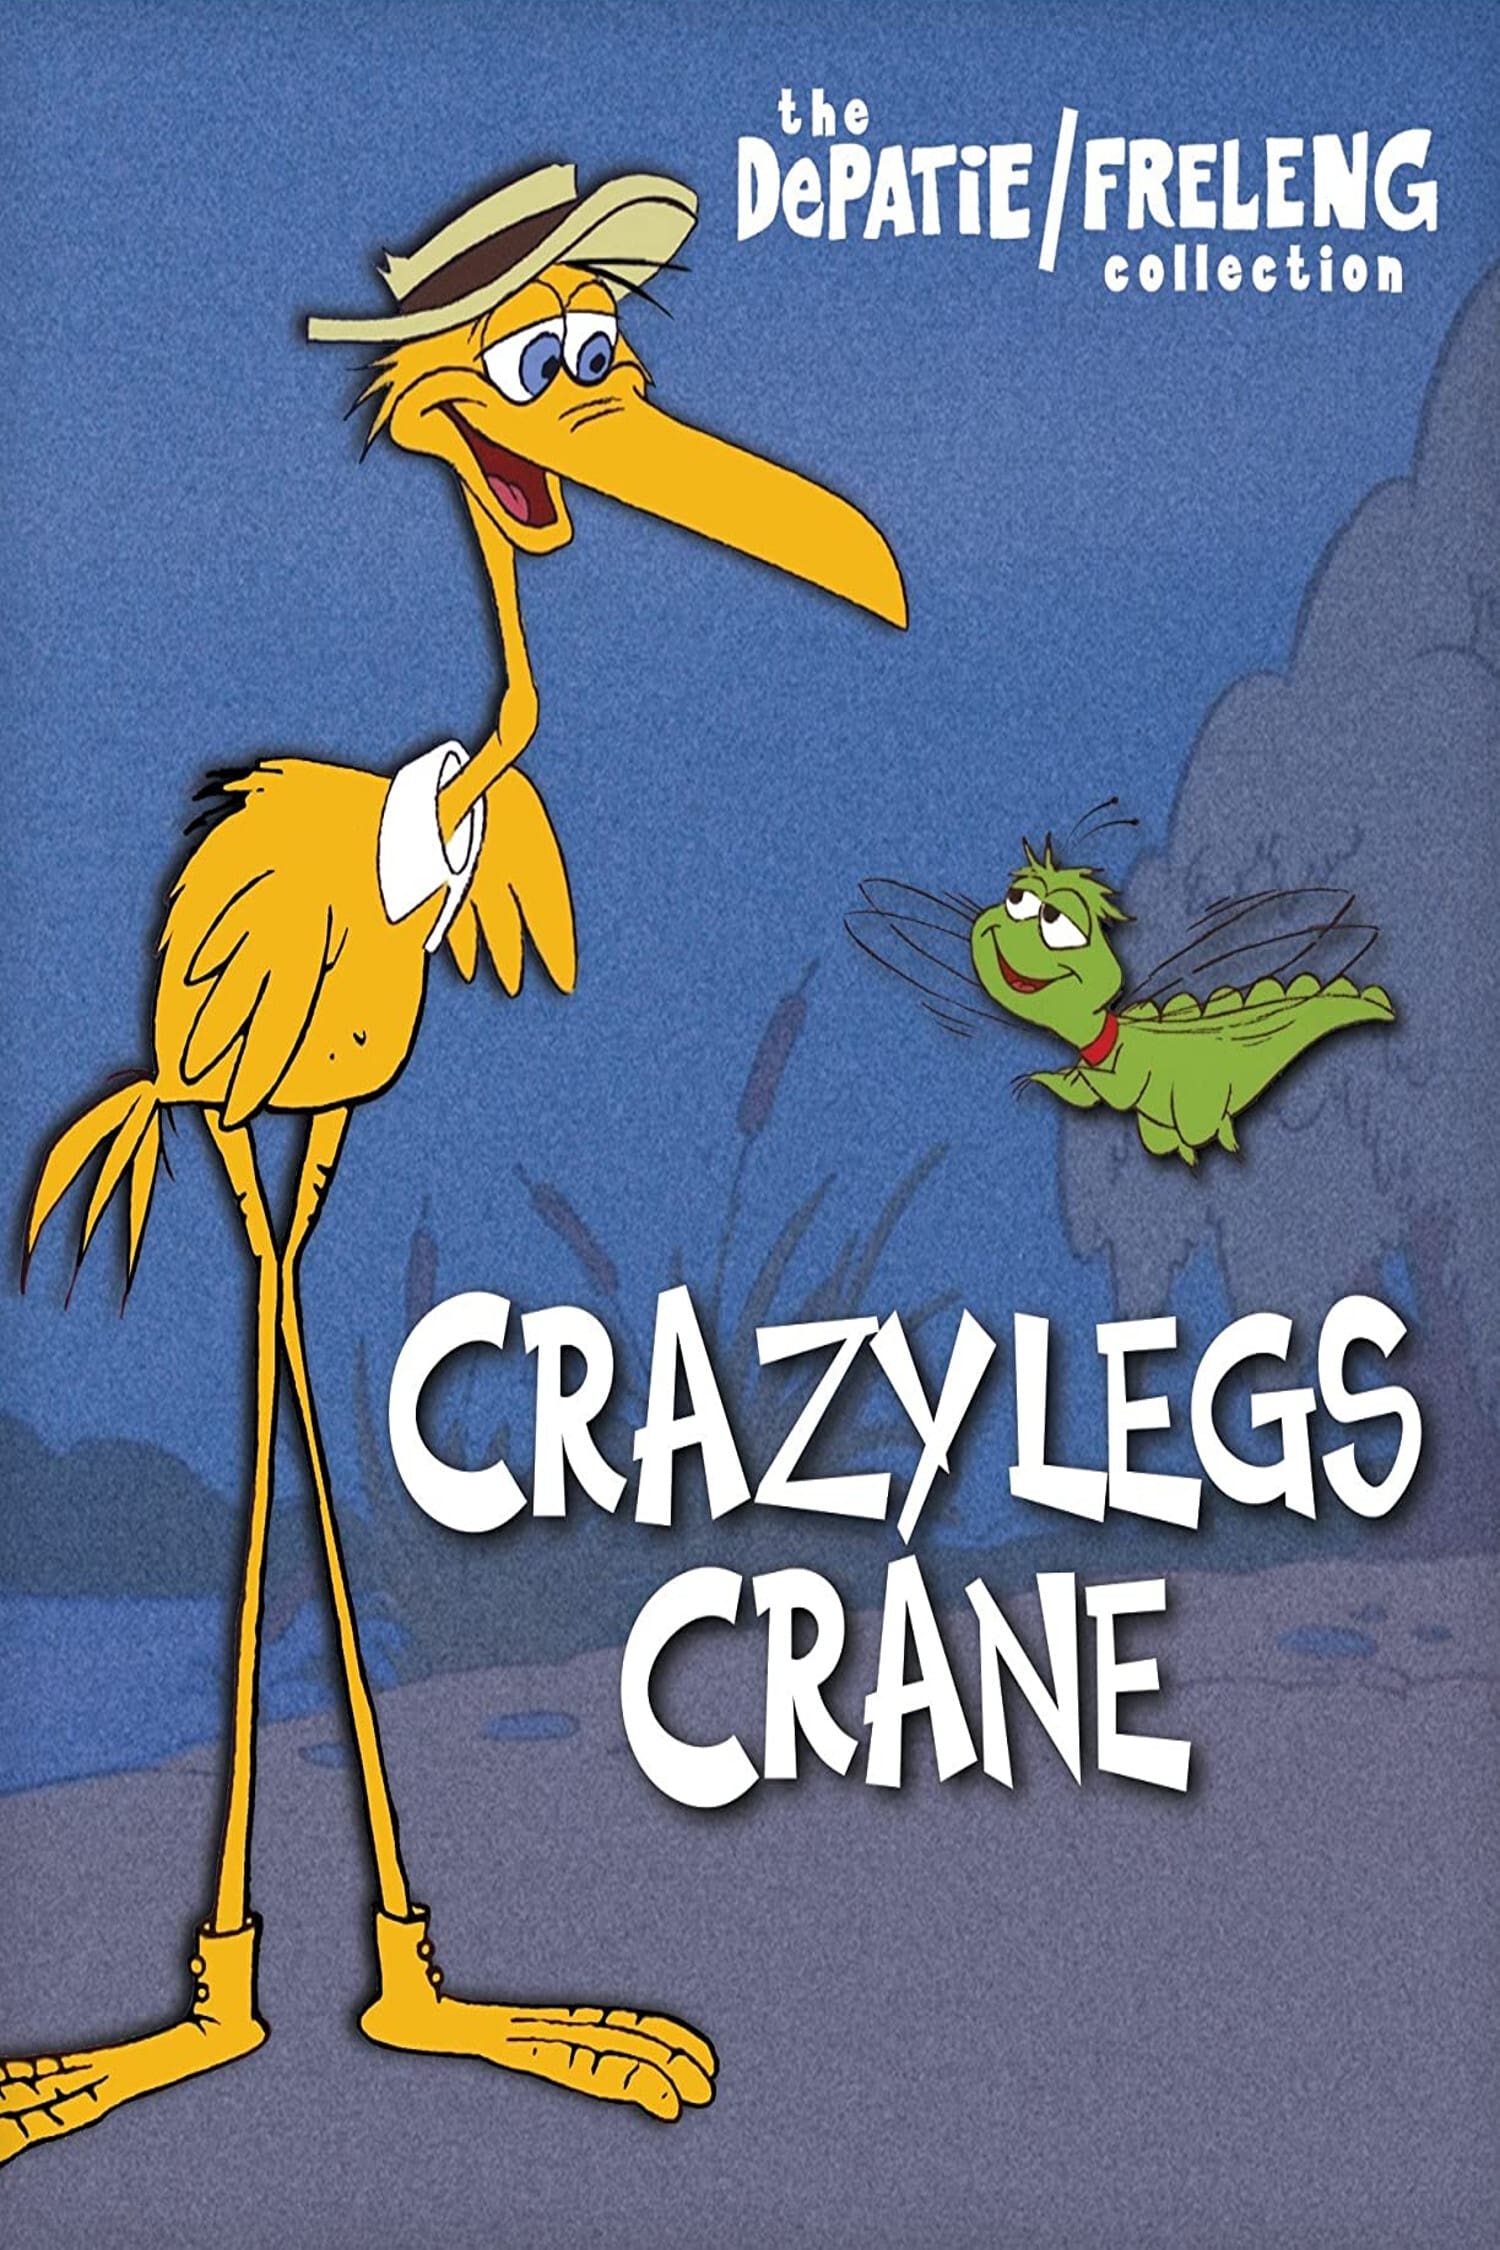 Crazylegs Crane (1978)